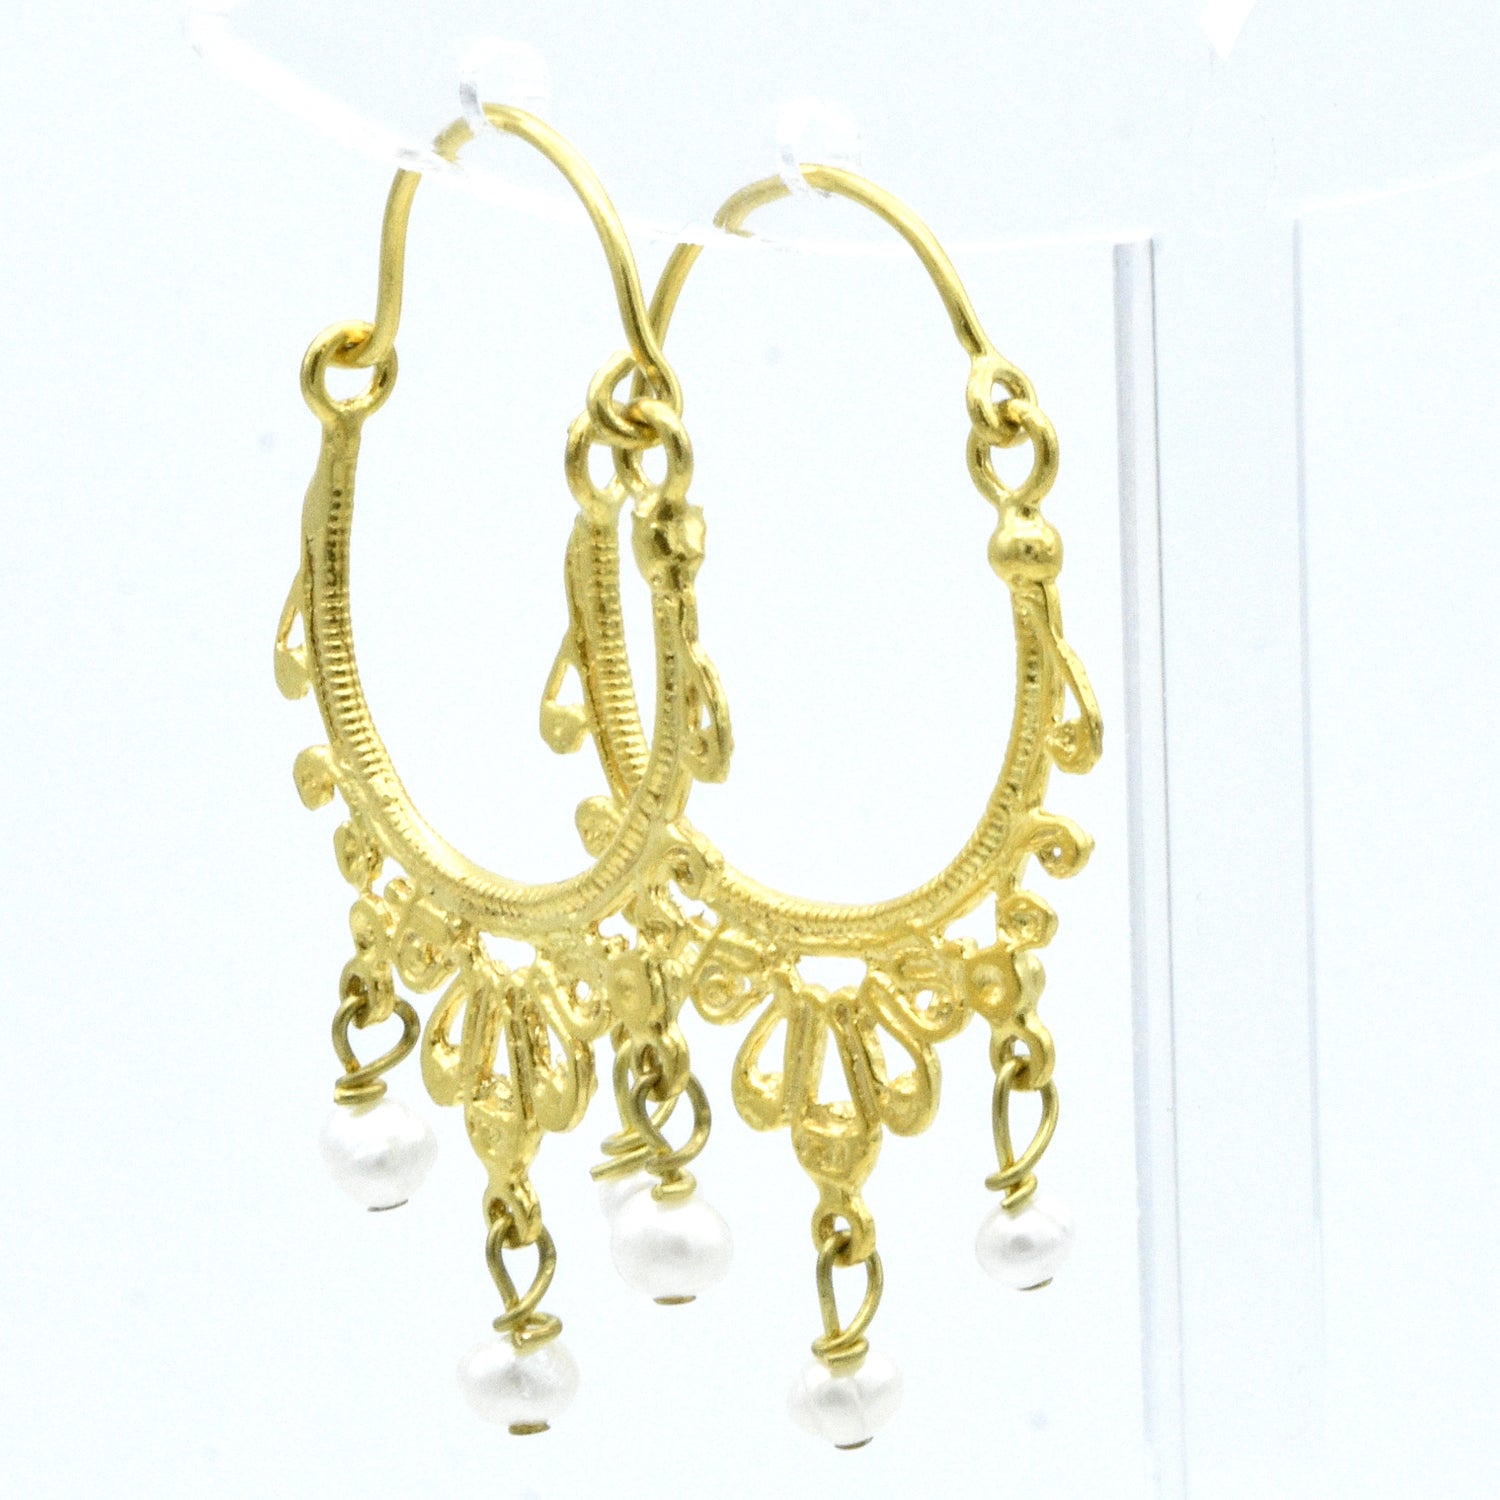 Aylas Pearl  earrings - 21ct Gold plated semi precious gemstone - Handmade in Ottoman Style by Artisan